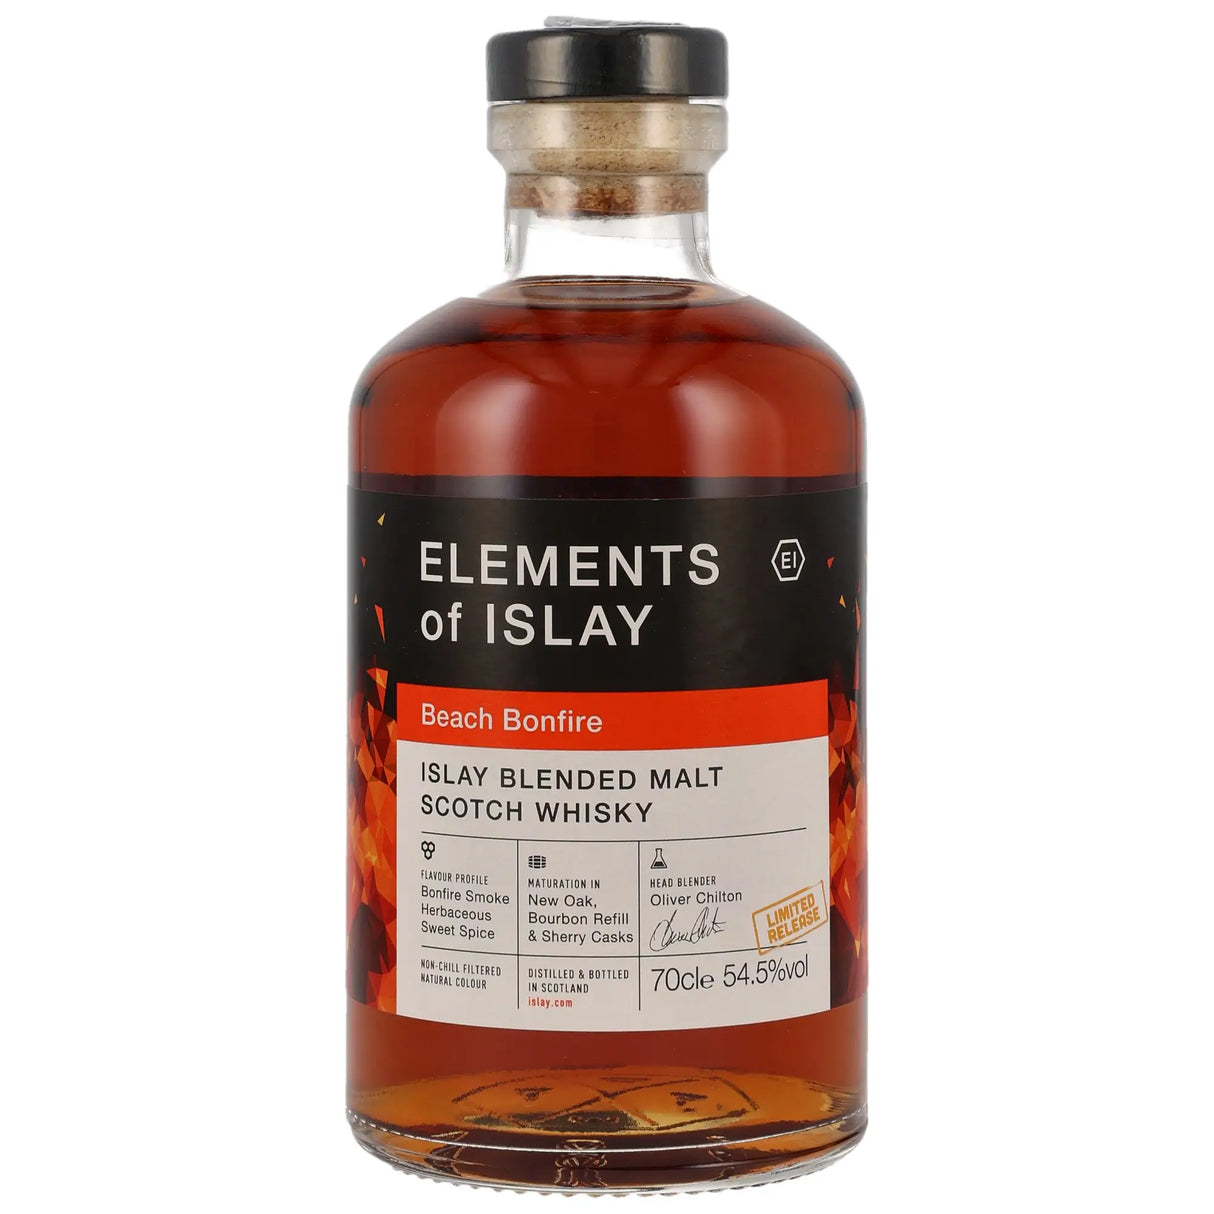 Elements of Islay Beach Bonfire Islay Blended Malt Whisky